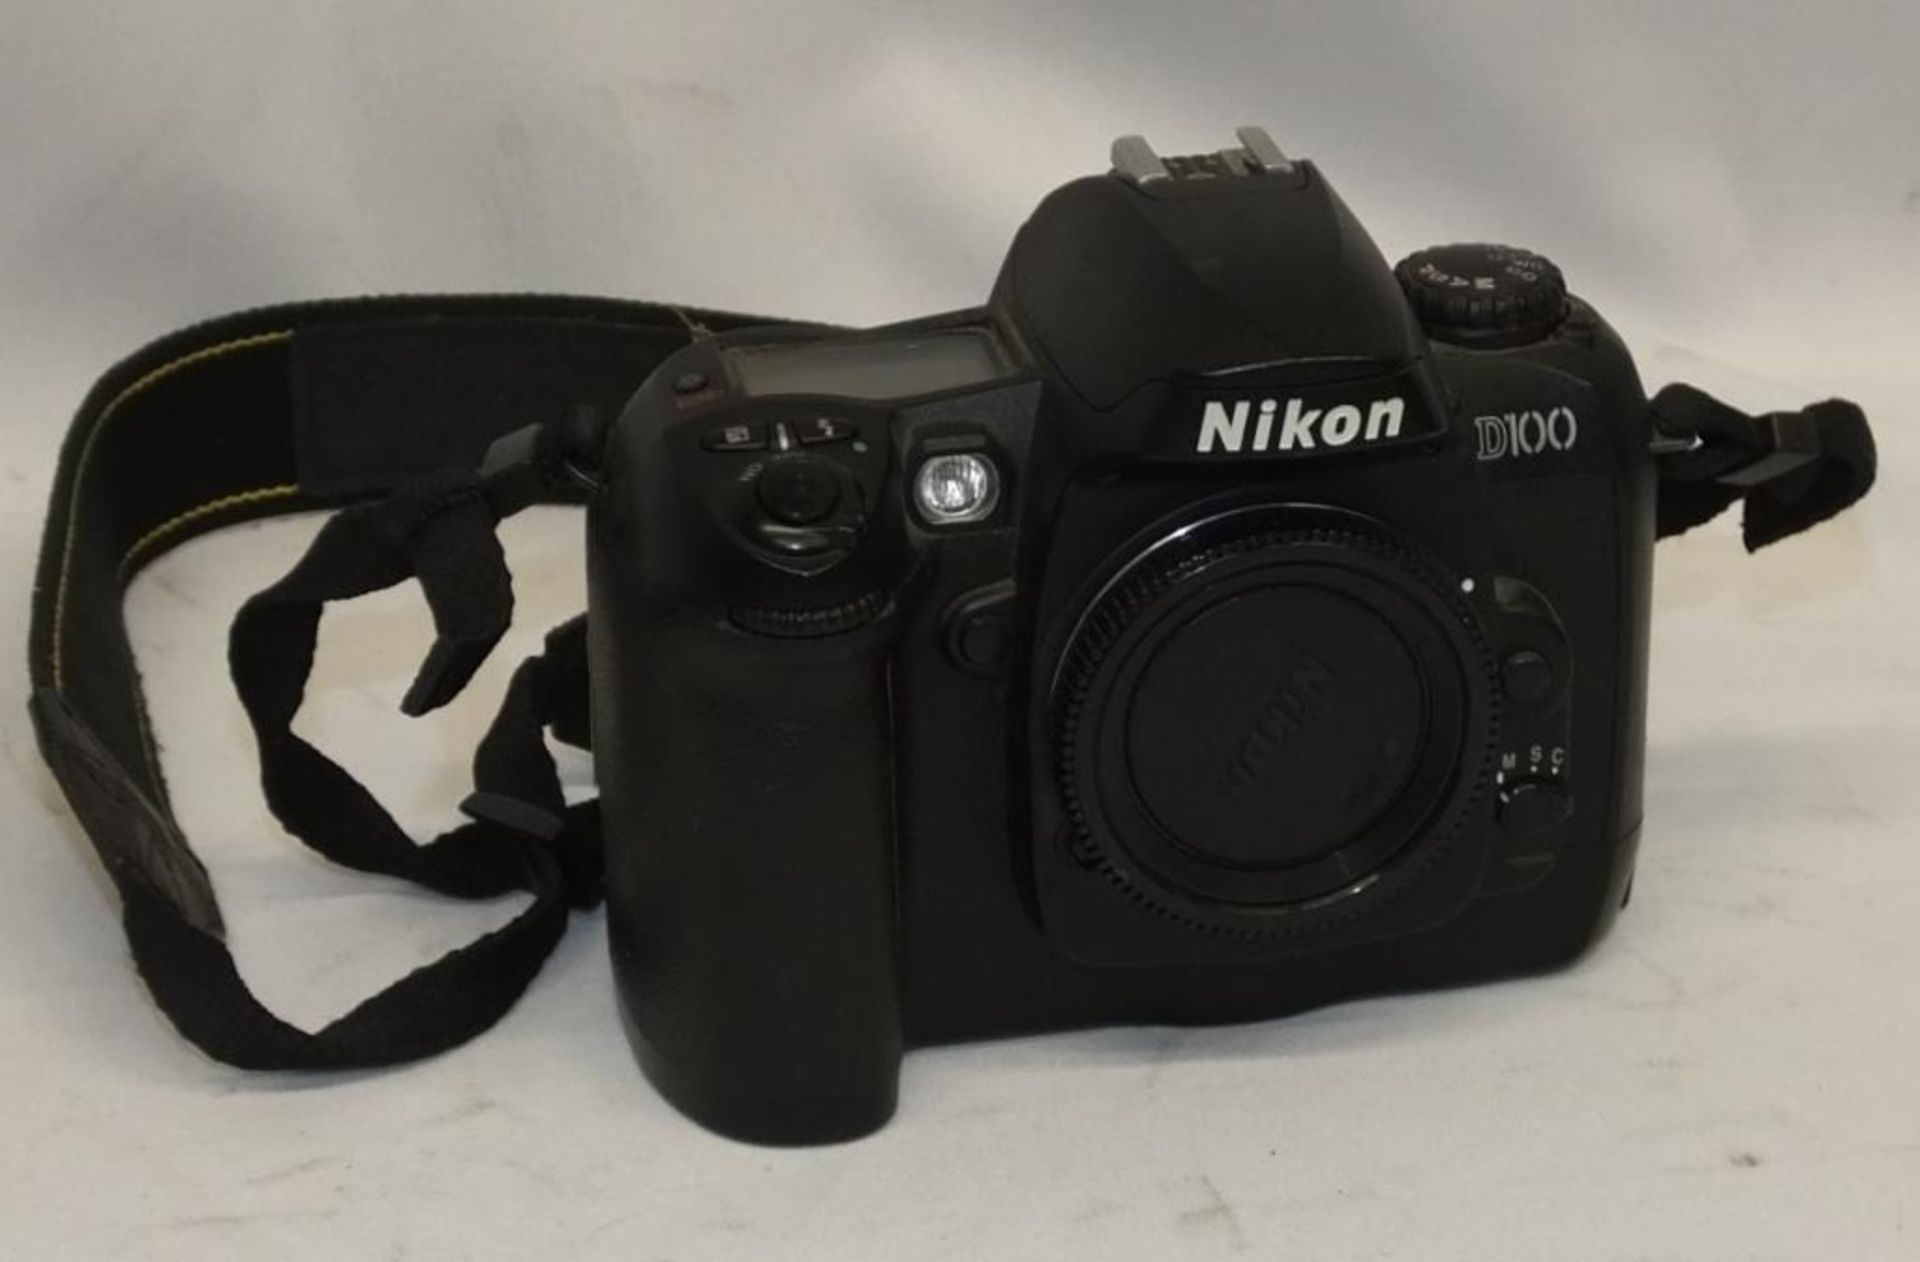 2x Nikon D100 camera bodies - serials 2269690, 2290444 - no batteries, no memory cards - Image 2 of 7